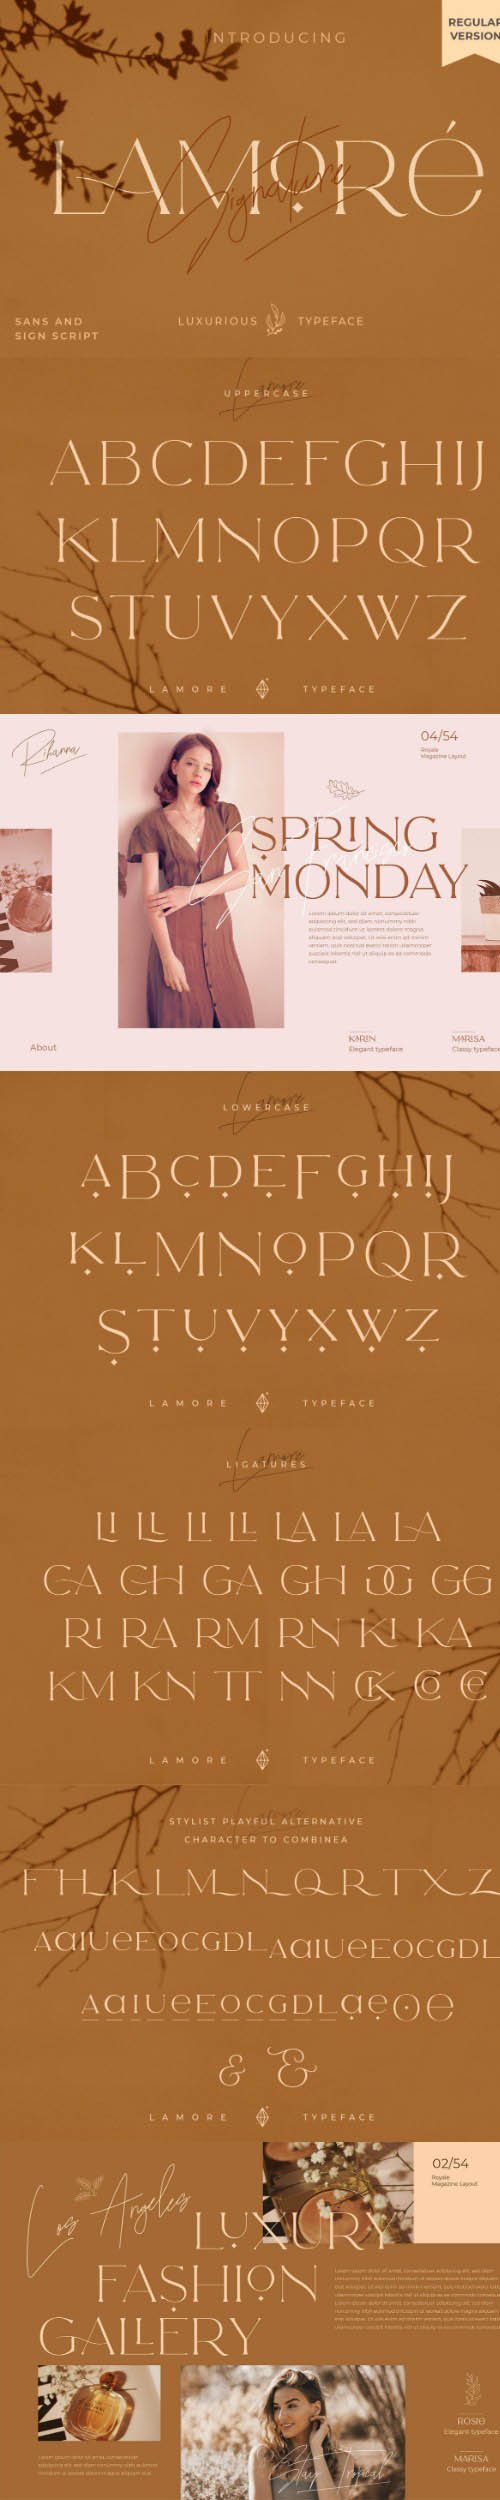 The Lamore Sans & Script Typeface- Regular Version